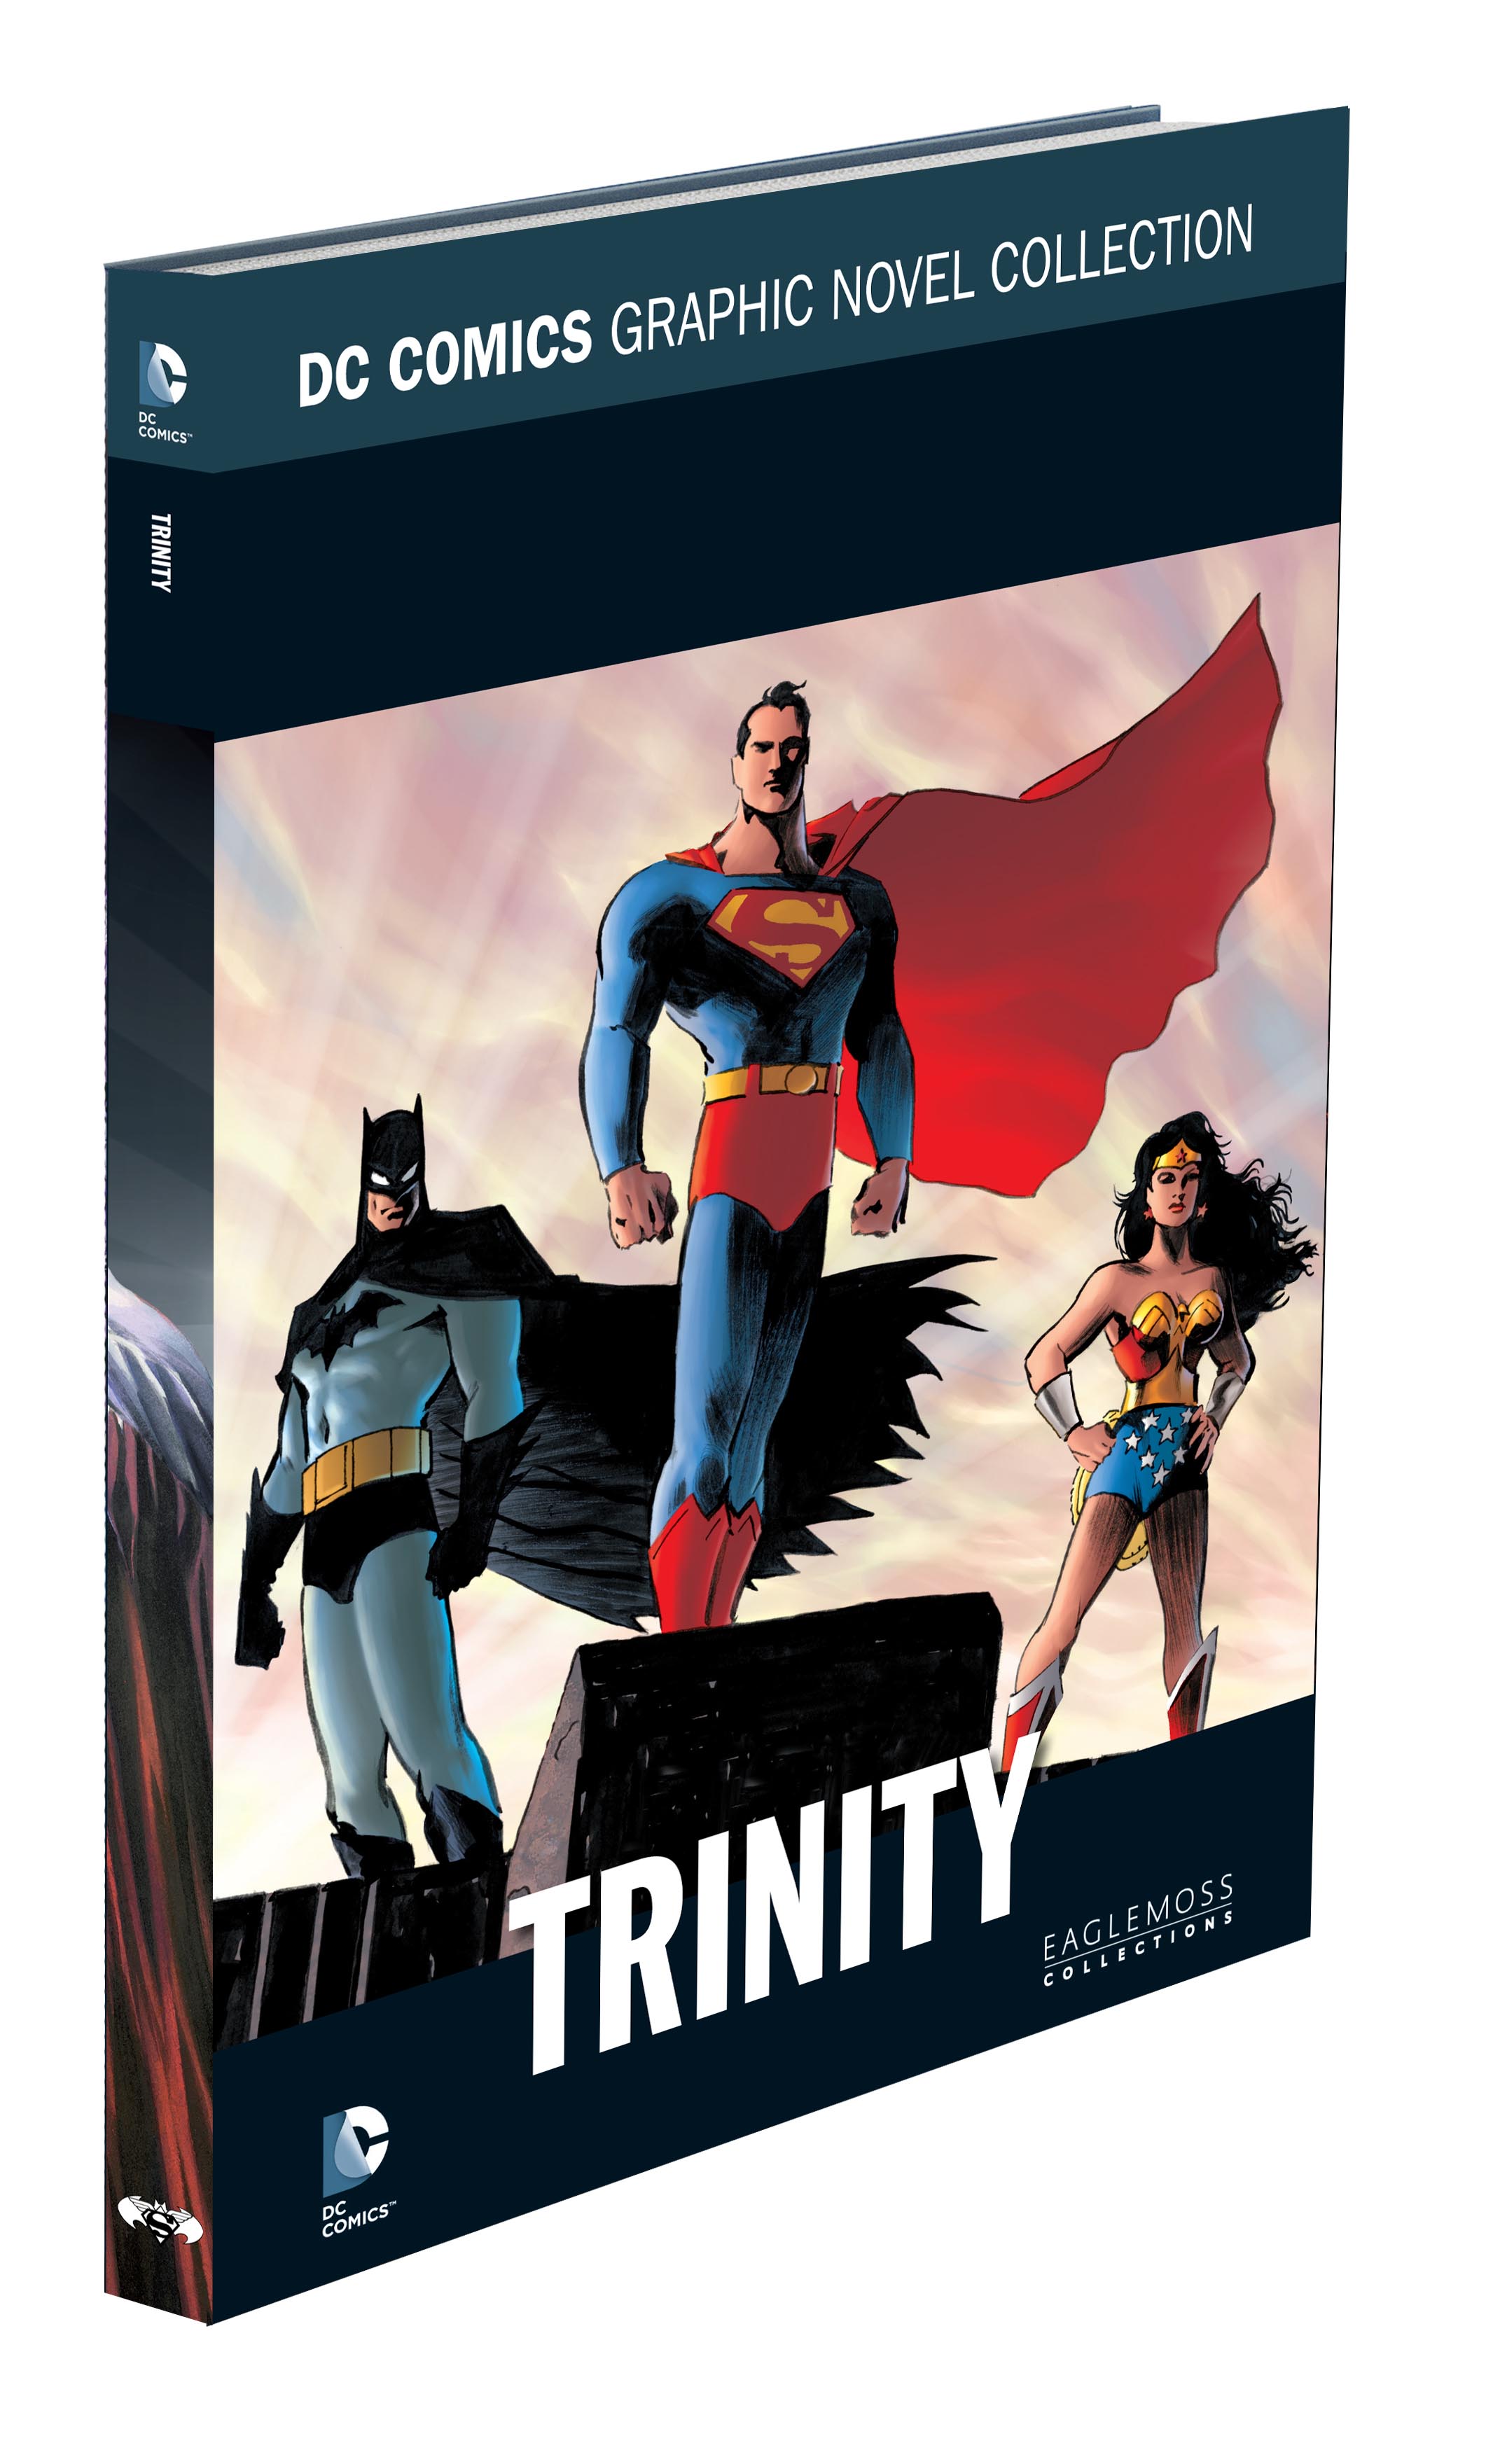 DC Comics Graphic Novel Collection Trinity